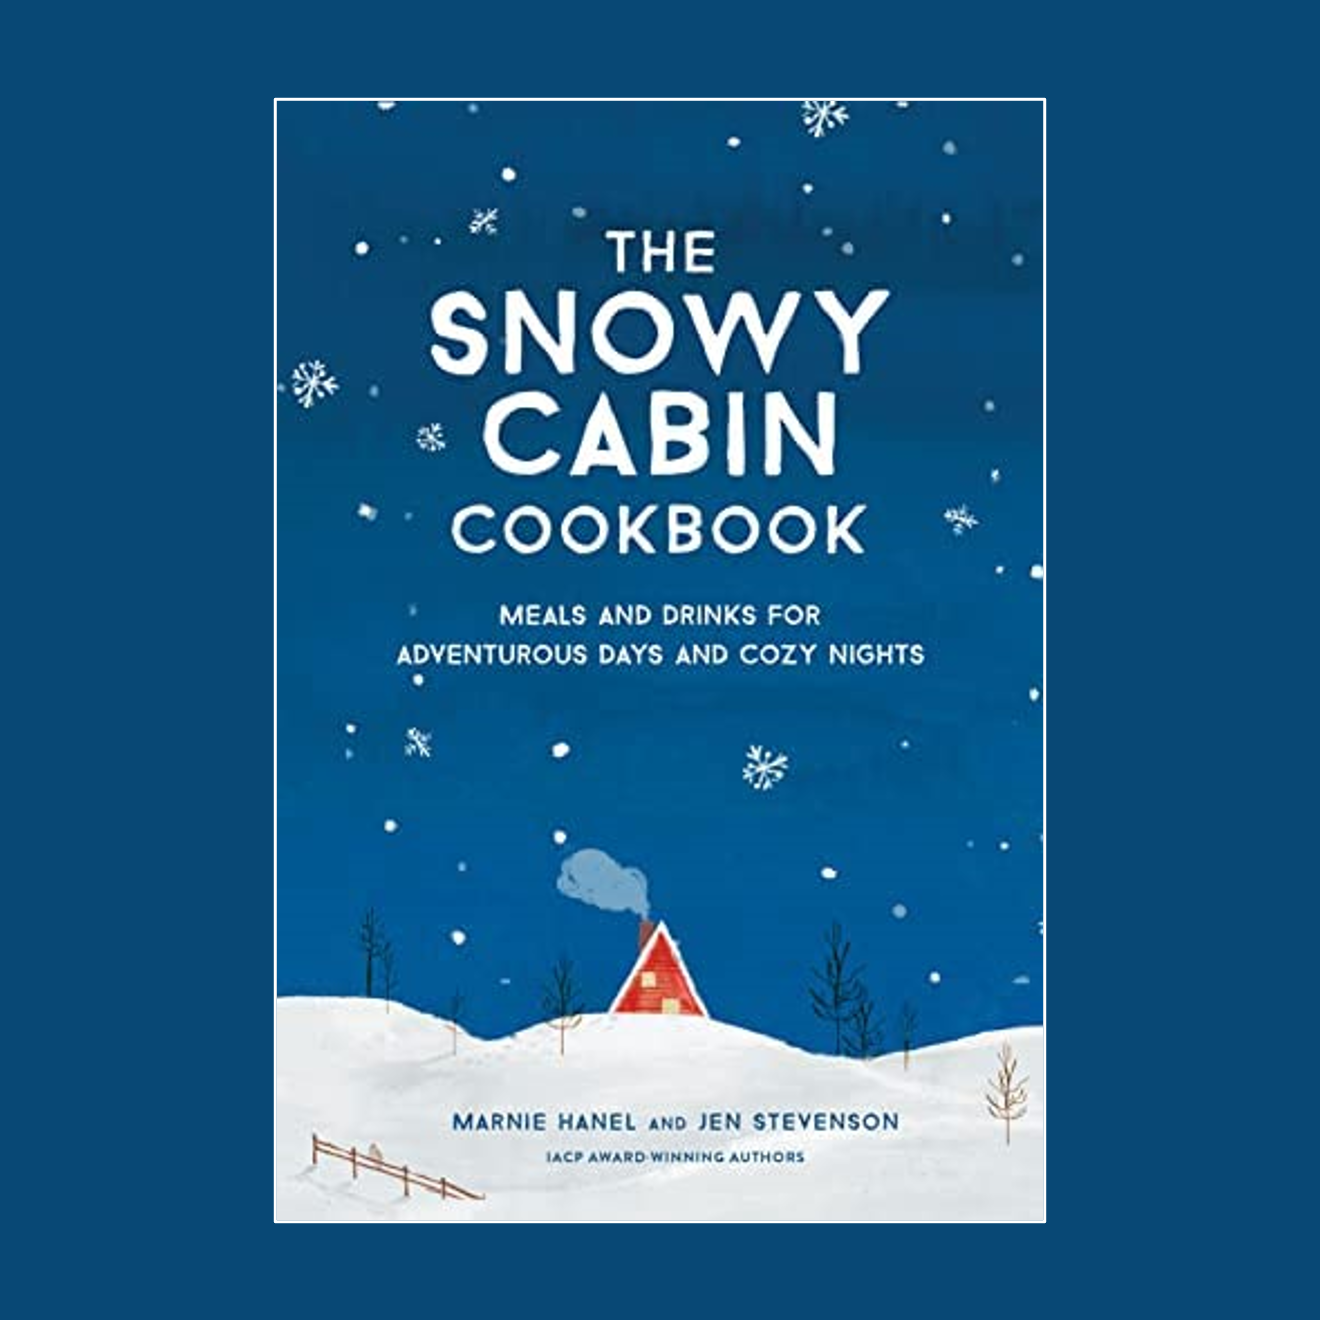 The Snowy Cabin Cookbook by Marne Hanel and Jen Stevenson